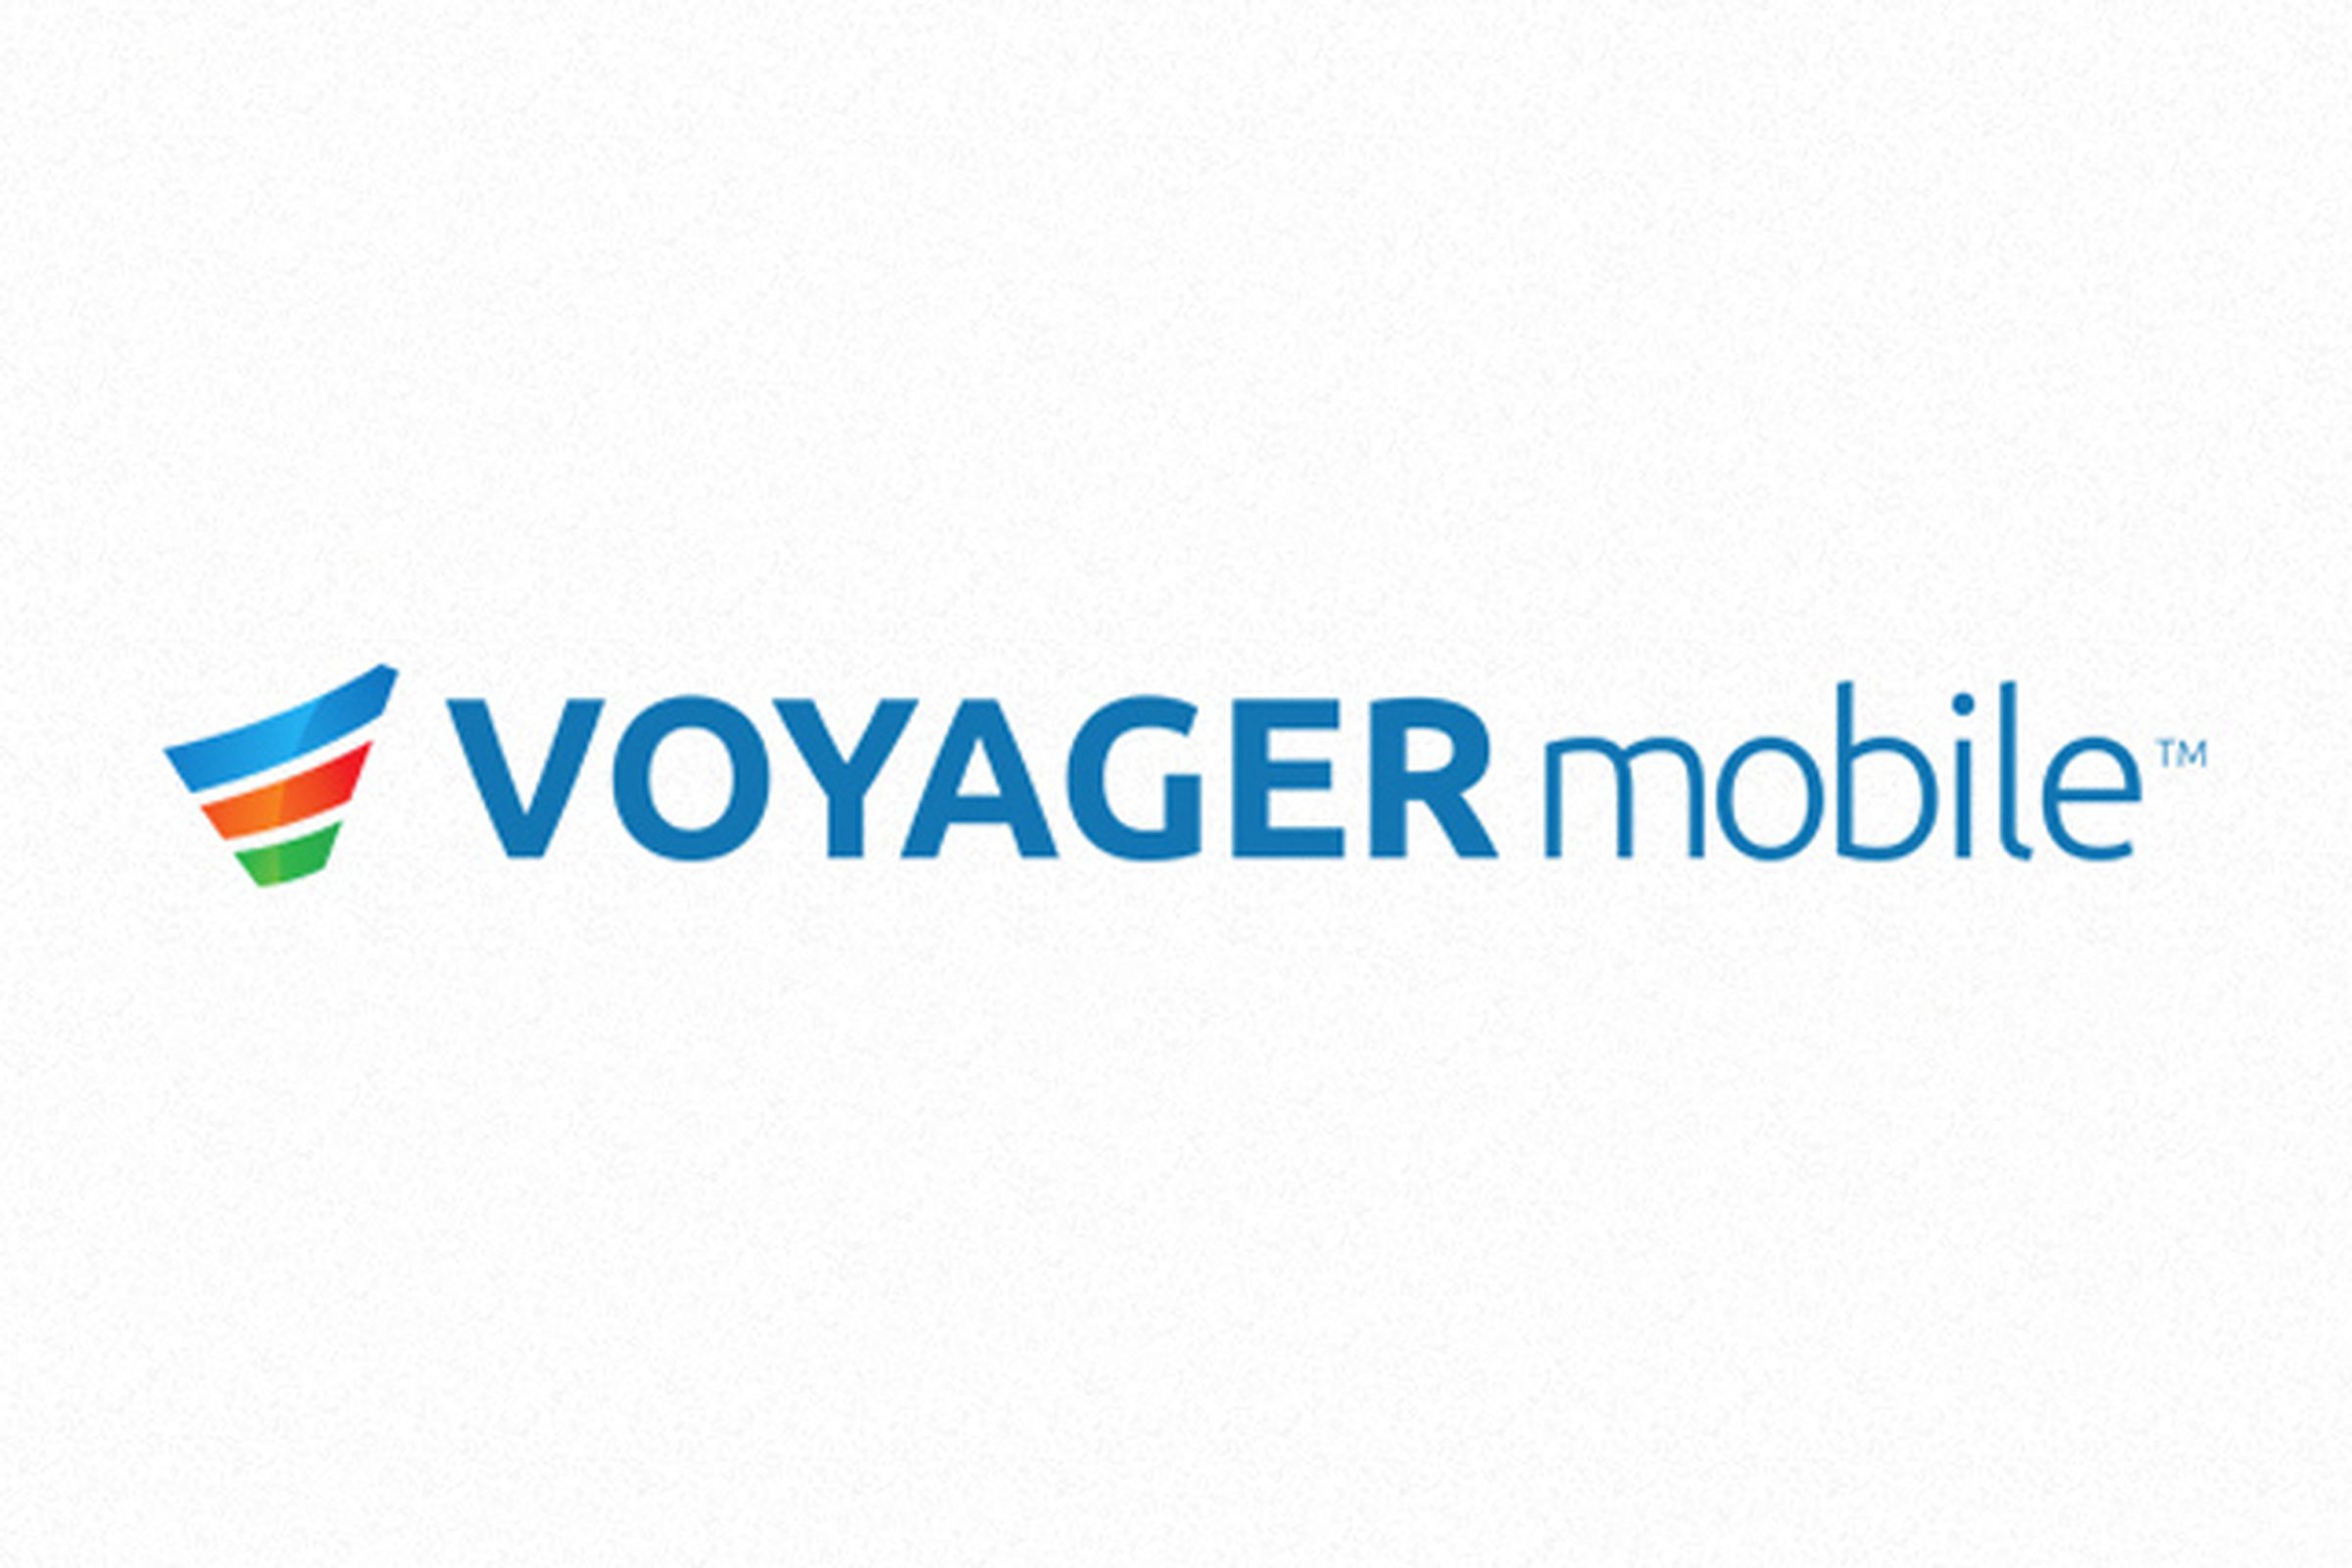 Voyager Mobile logo 640